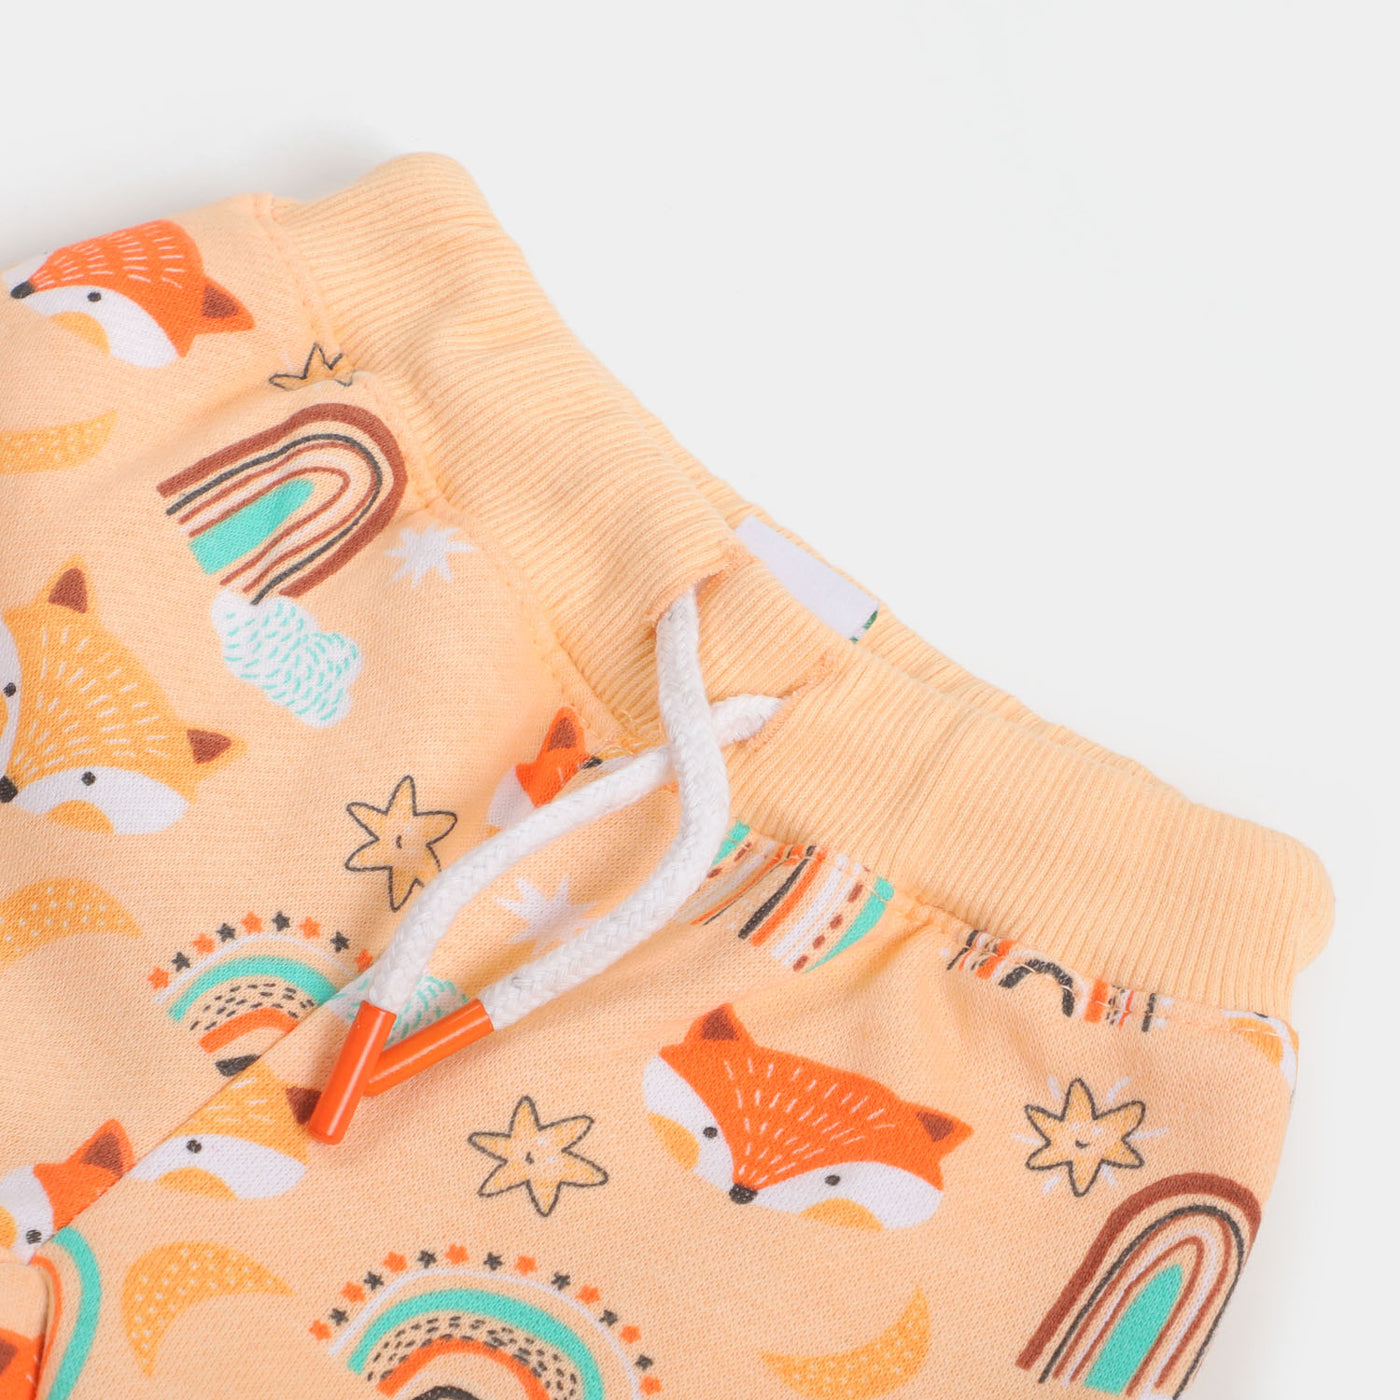 Infant Boys Pyjama Fox - Cream Puff